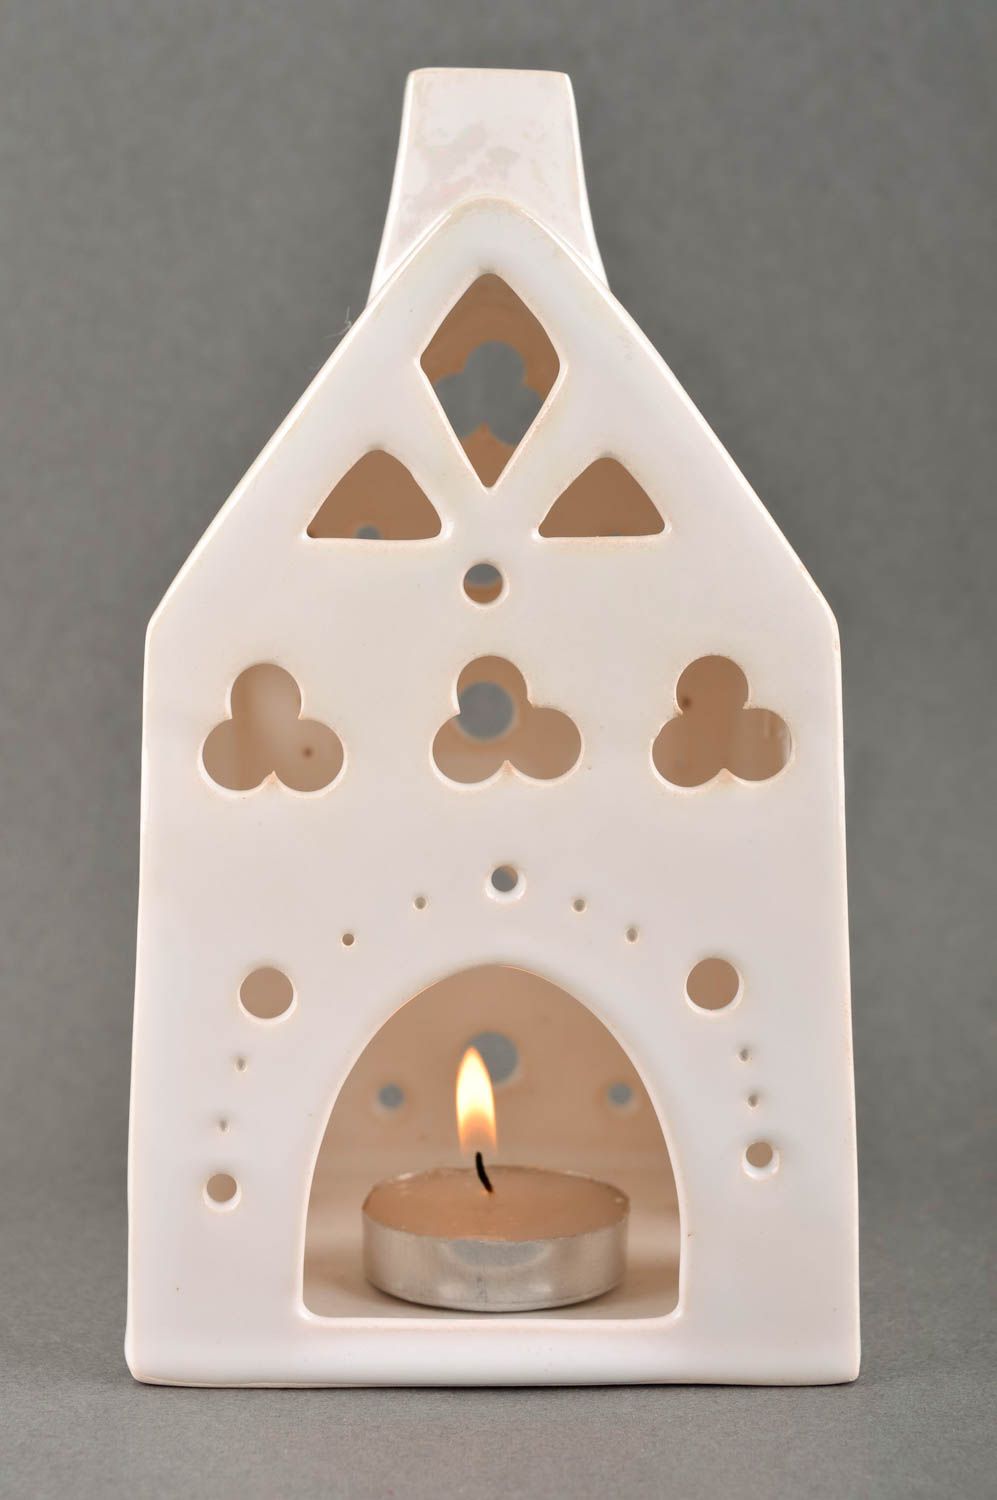 Handmade unusual candlestick designer home decor unusual stylish accessory photo 1